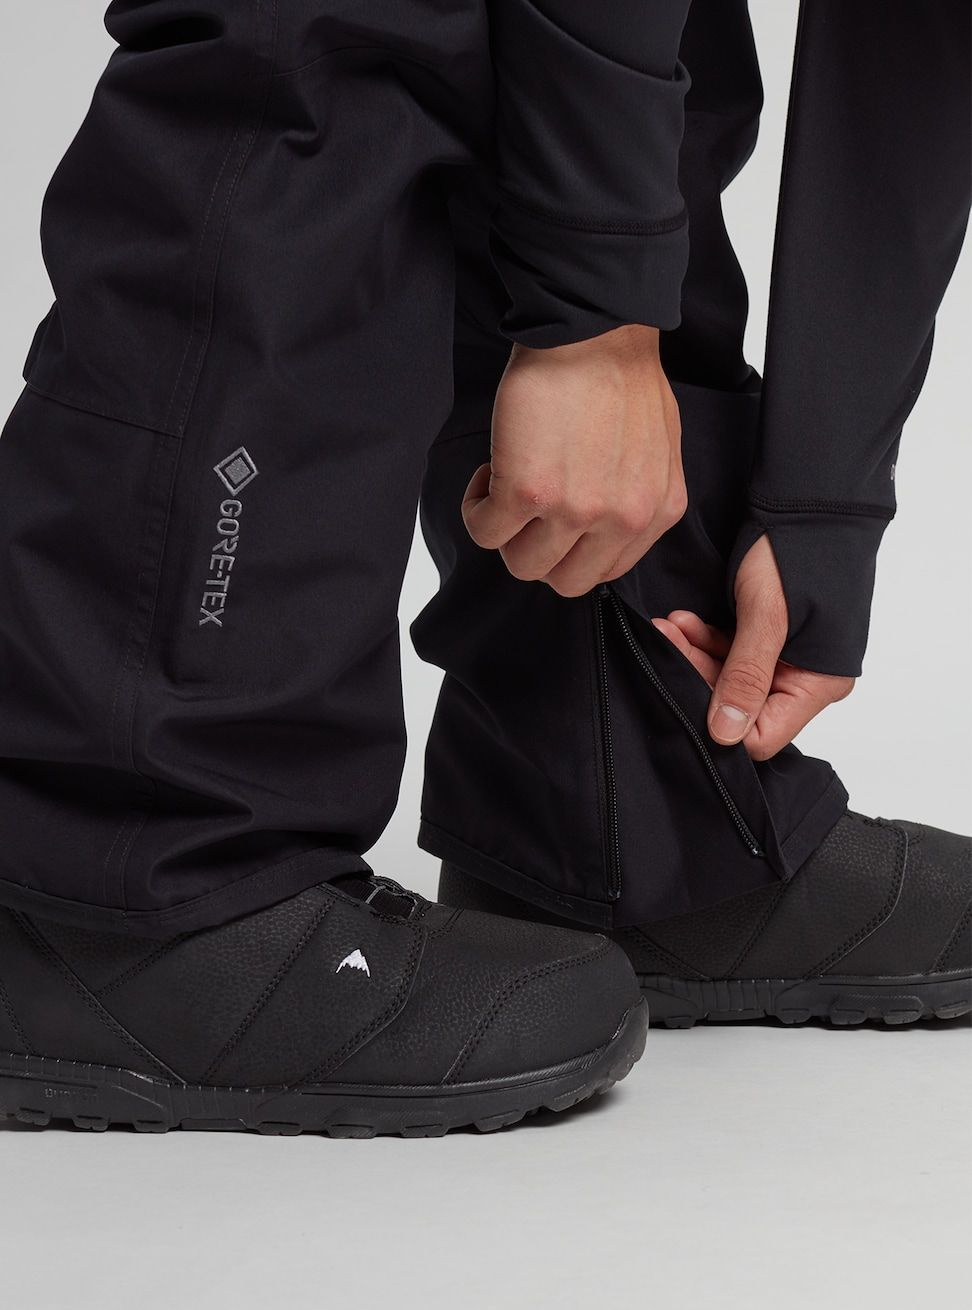 Men's Burton Ballast GORE-TEX 2L Pants True Black Snow Pants